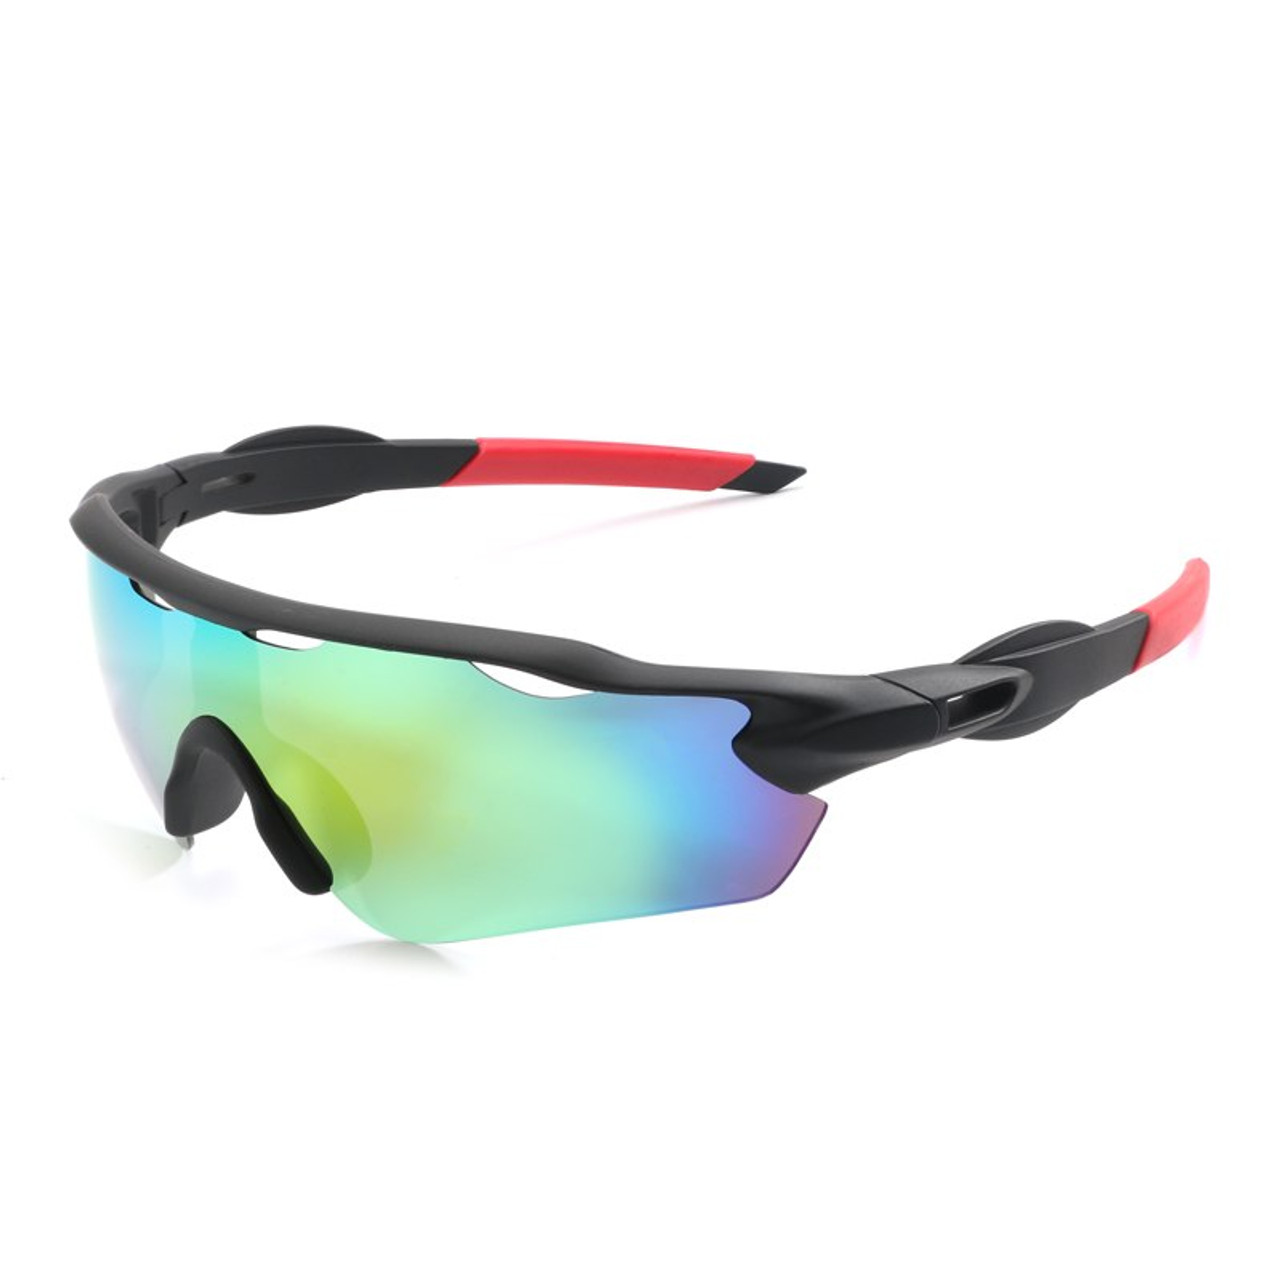 Over glasses sunglasses Polarized/Wear Over/fit over Glasses Driver Outdoor sports sunglasses men women 